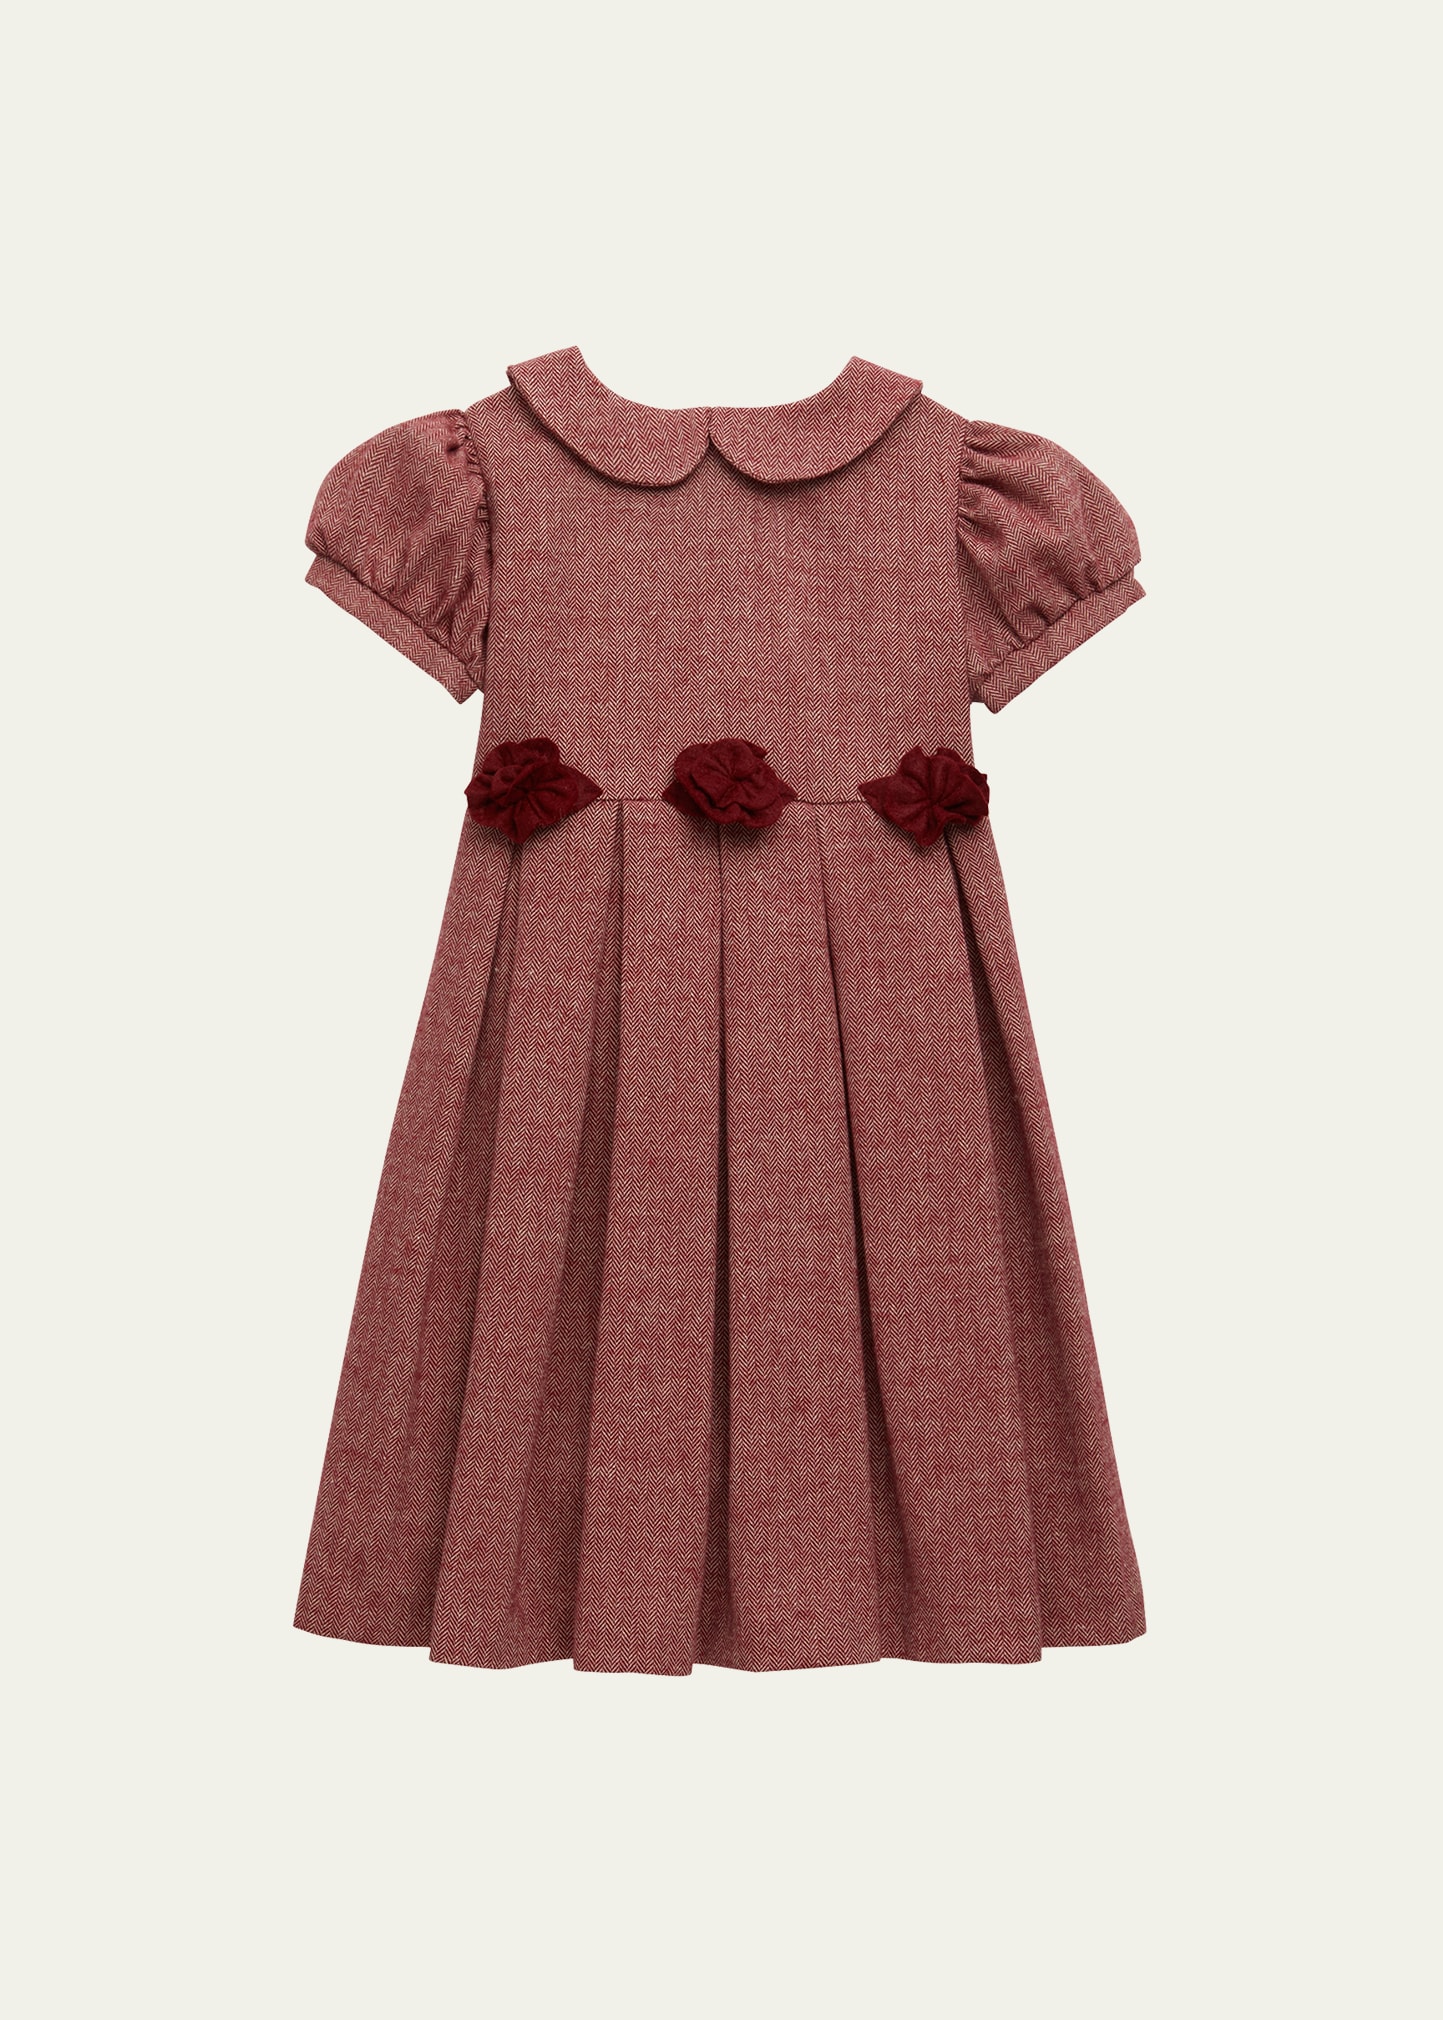 Girl's Rose Applique Dress, Size 3-10